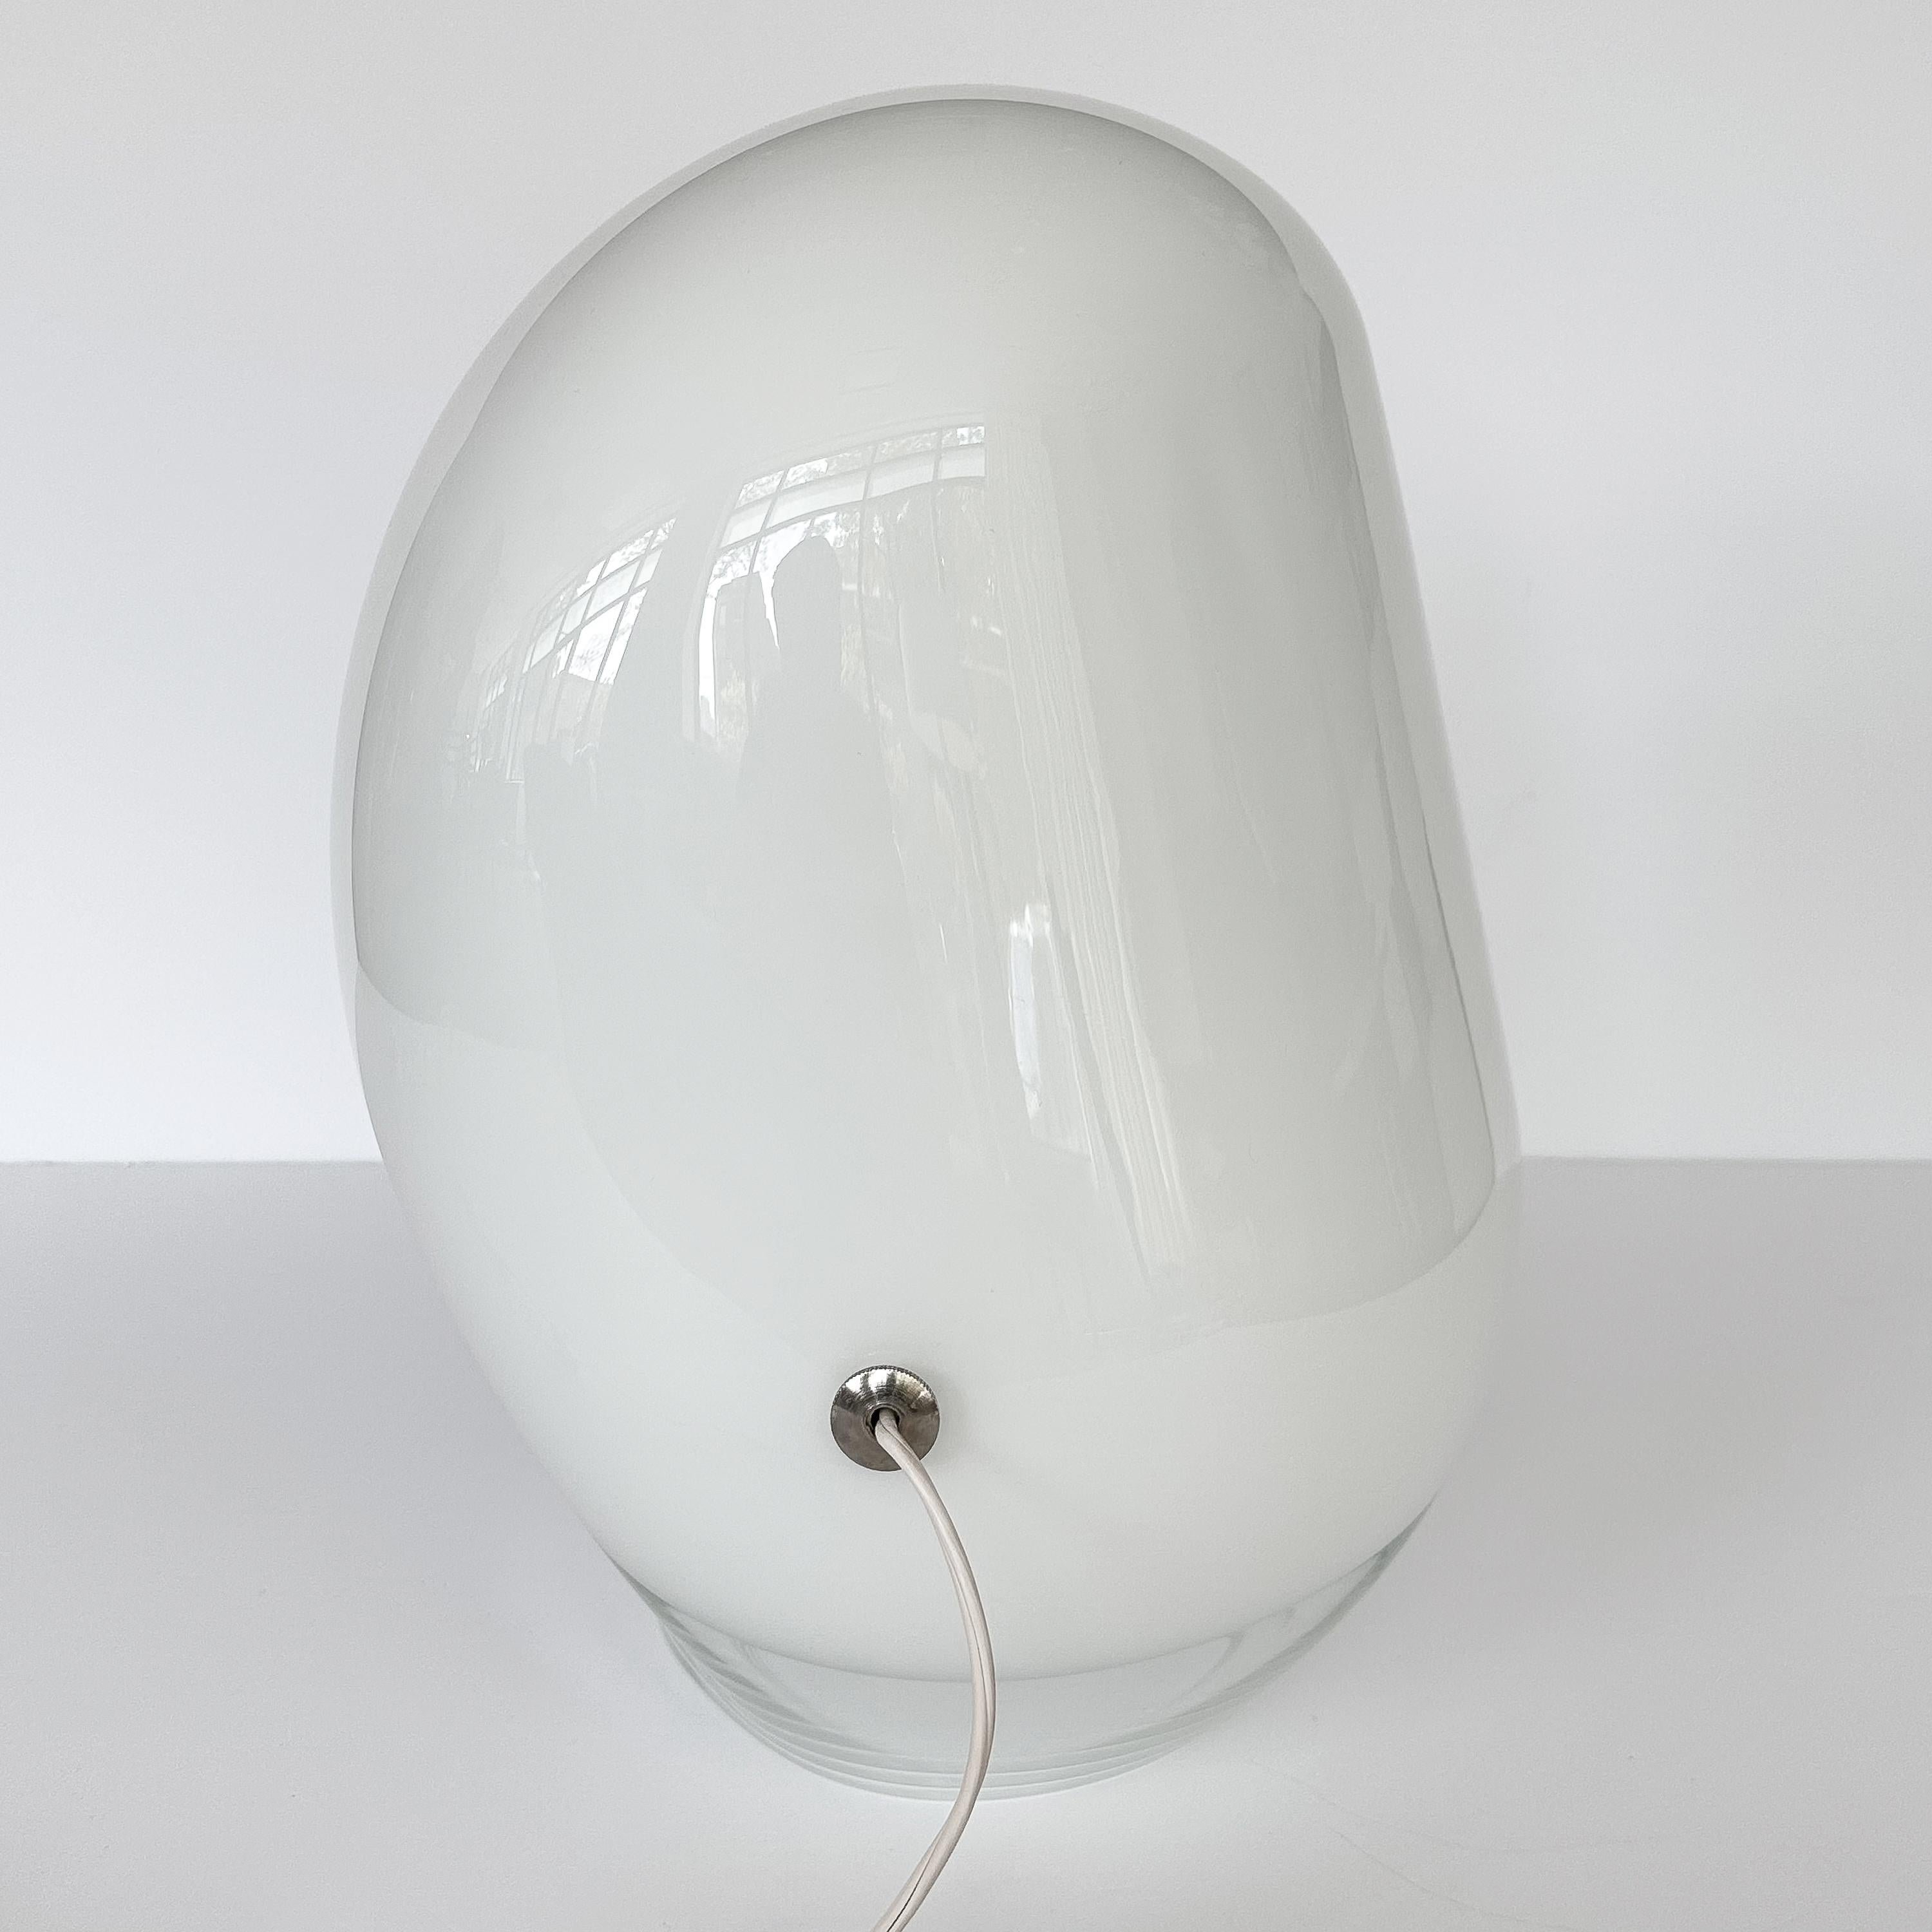 Vistosi Zago Table Lamp Model L282g by Gino Vistosi 4